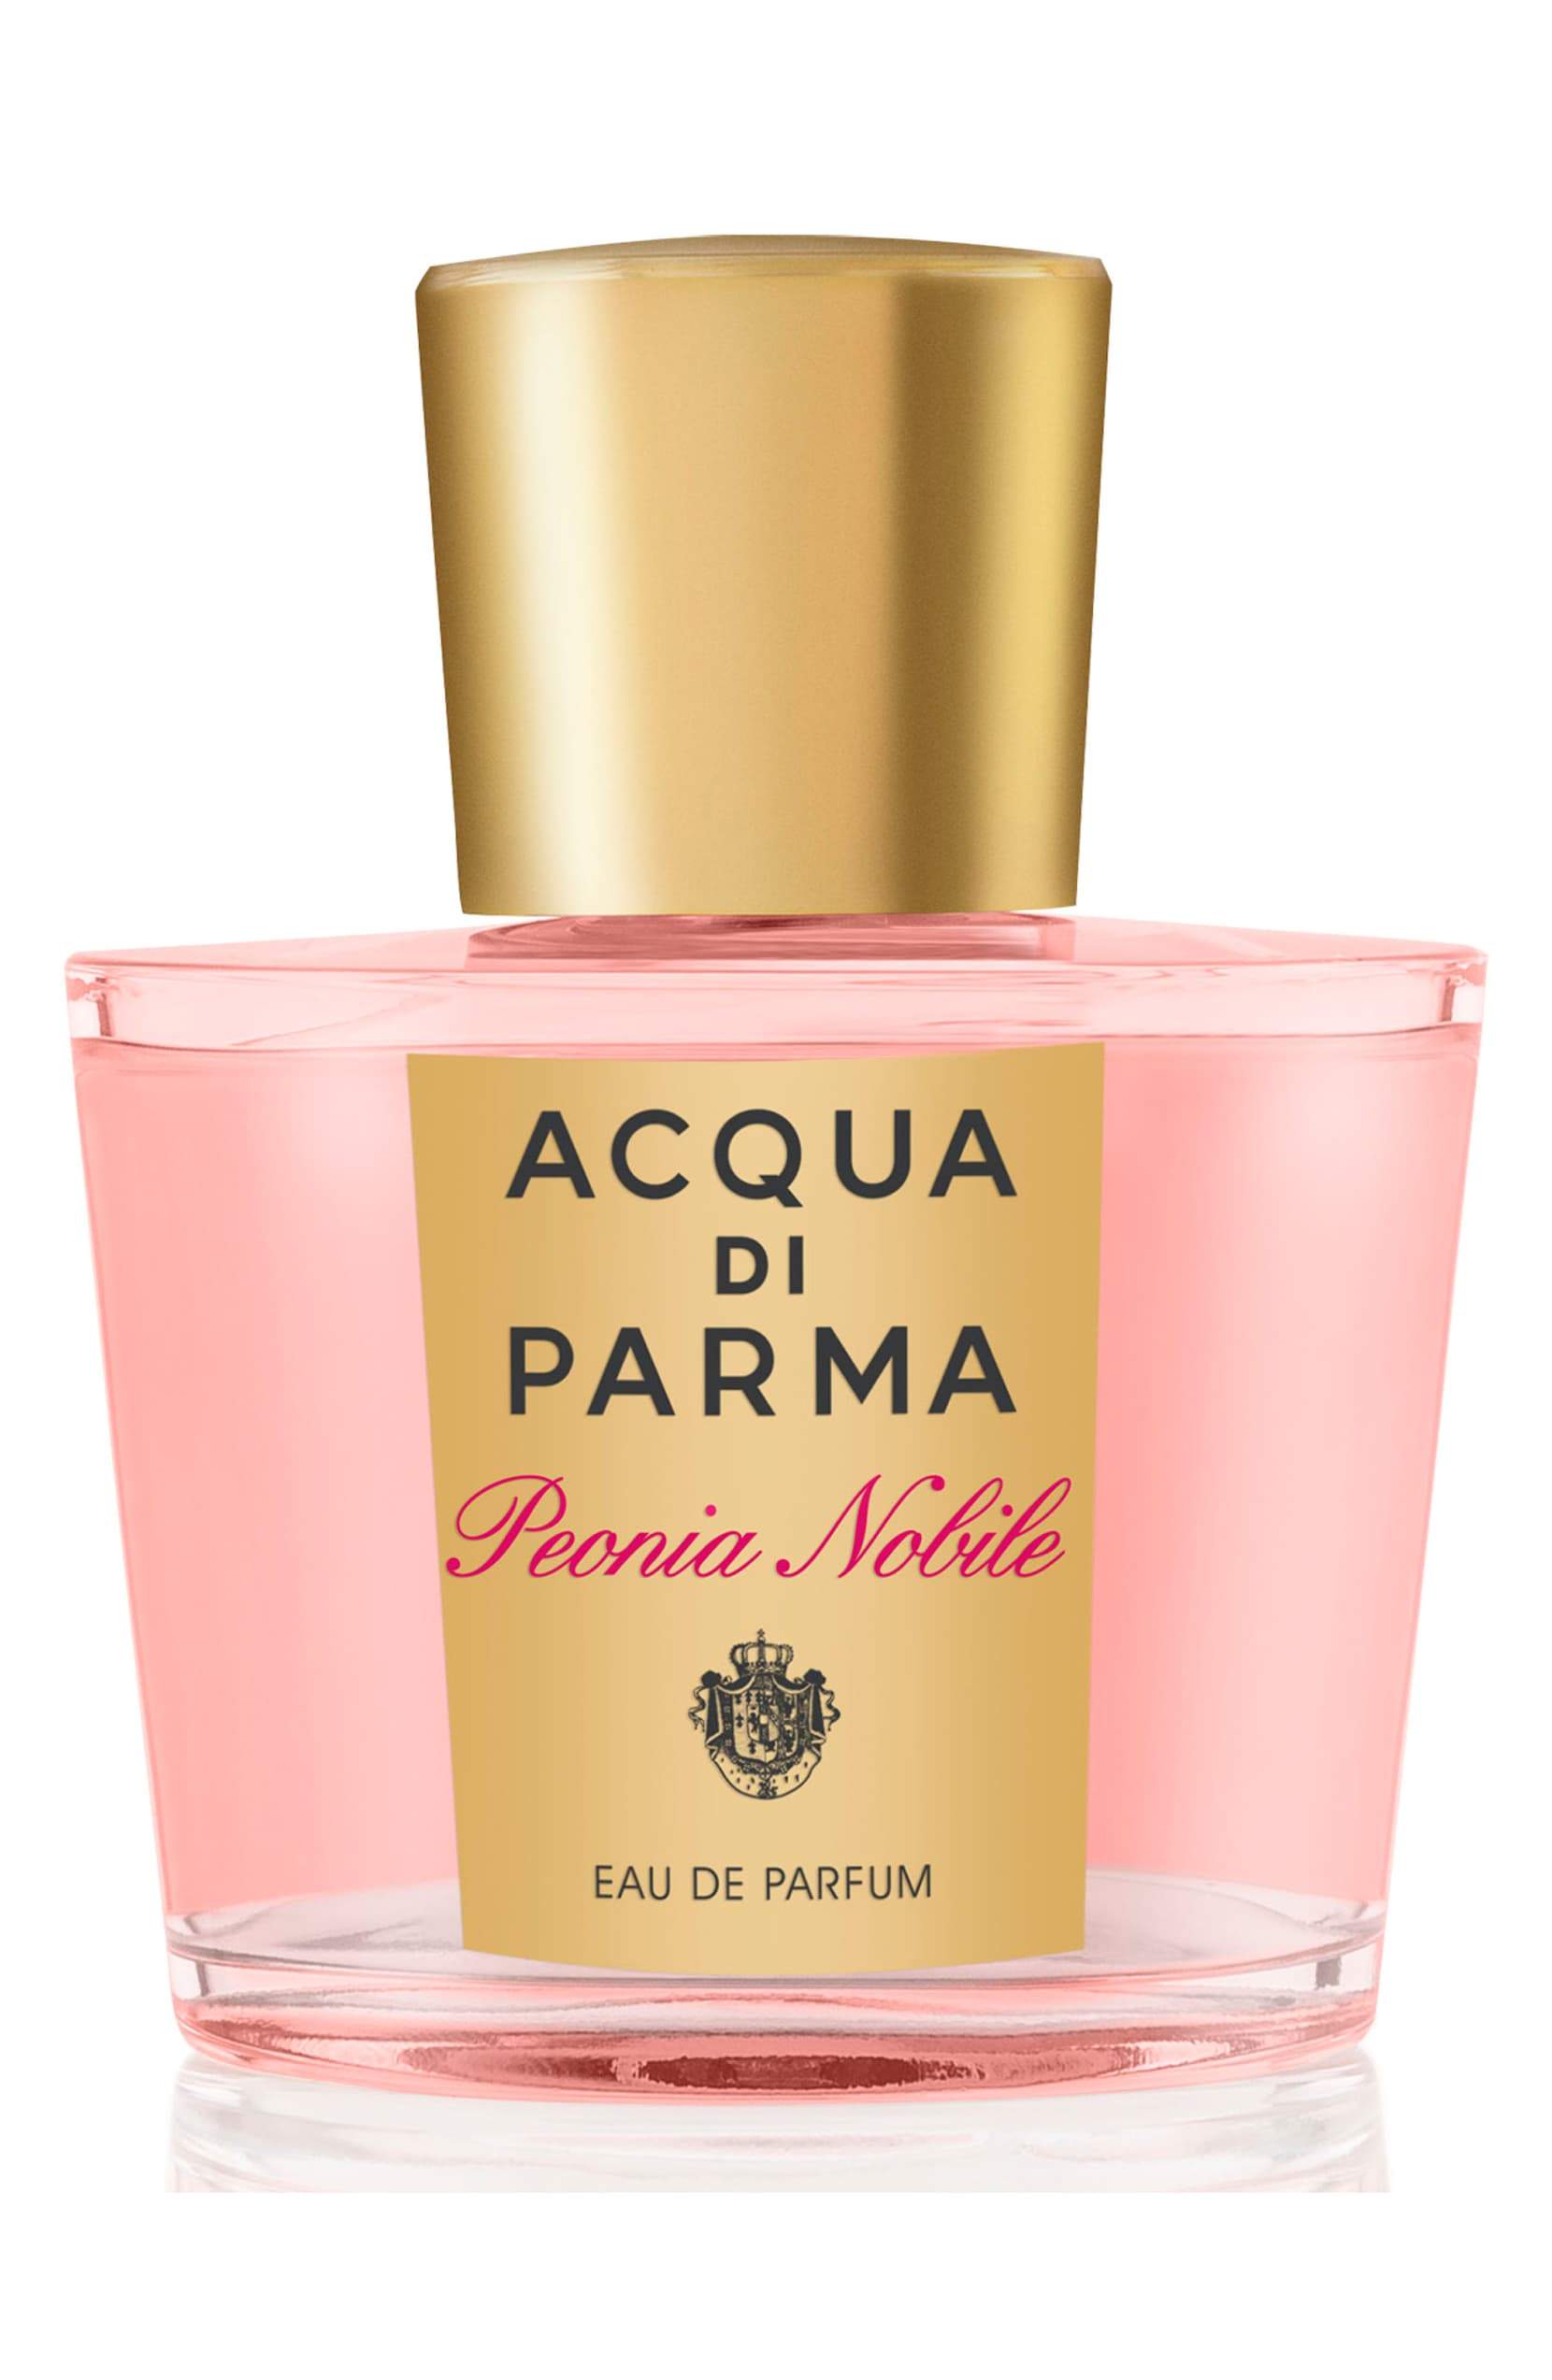 ACQUA DI PARMA PEONIA NOBILE Eau de Parfum Natural Spray - eCosmeticWorld